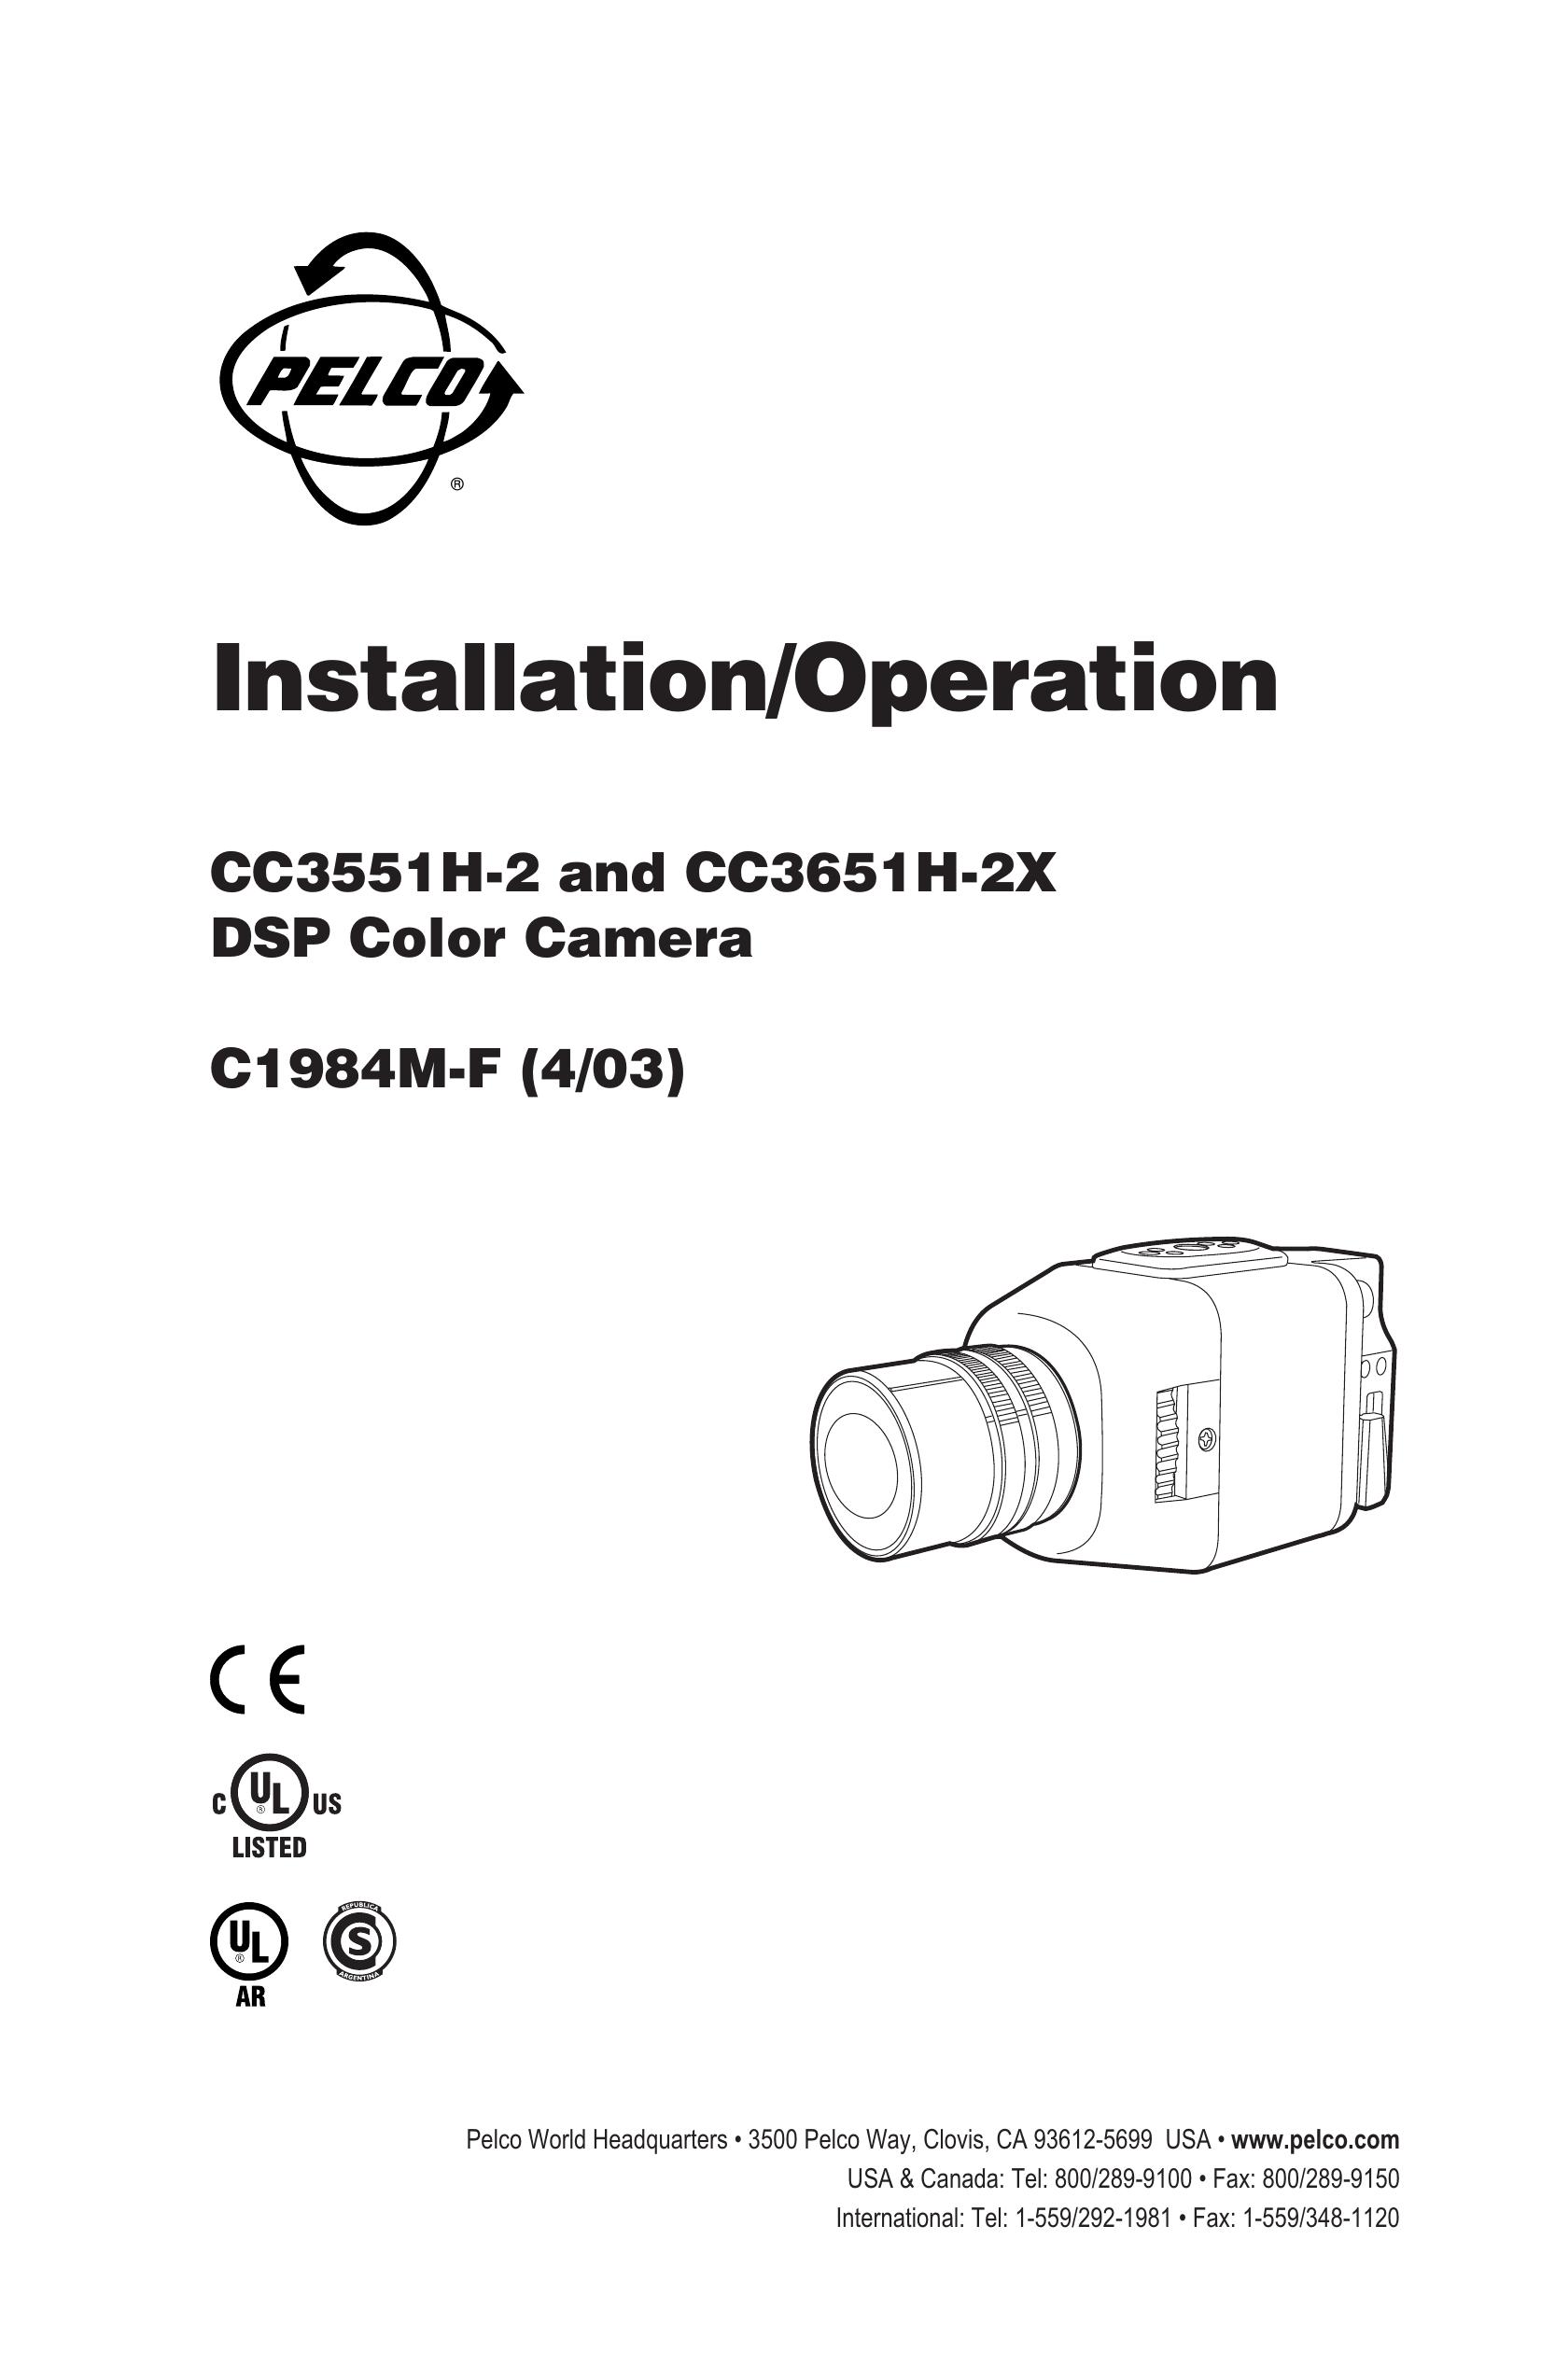 Pelco DSP Color Camera Digital Camera User Manual